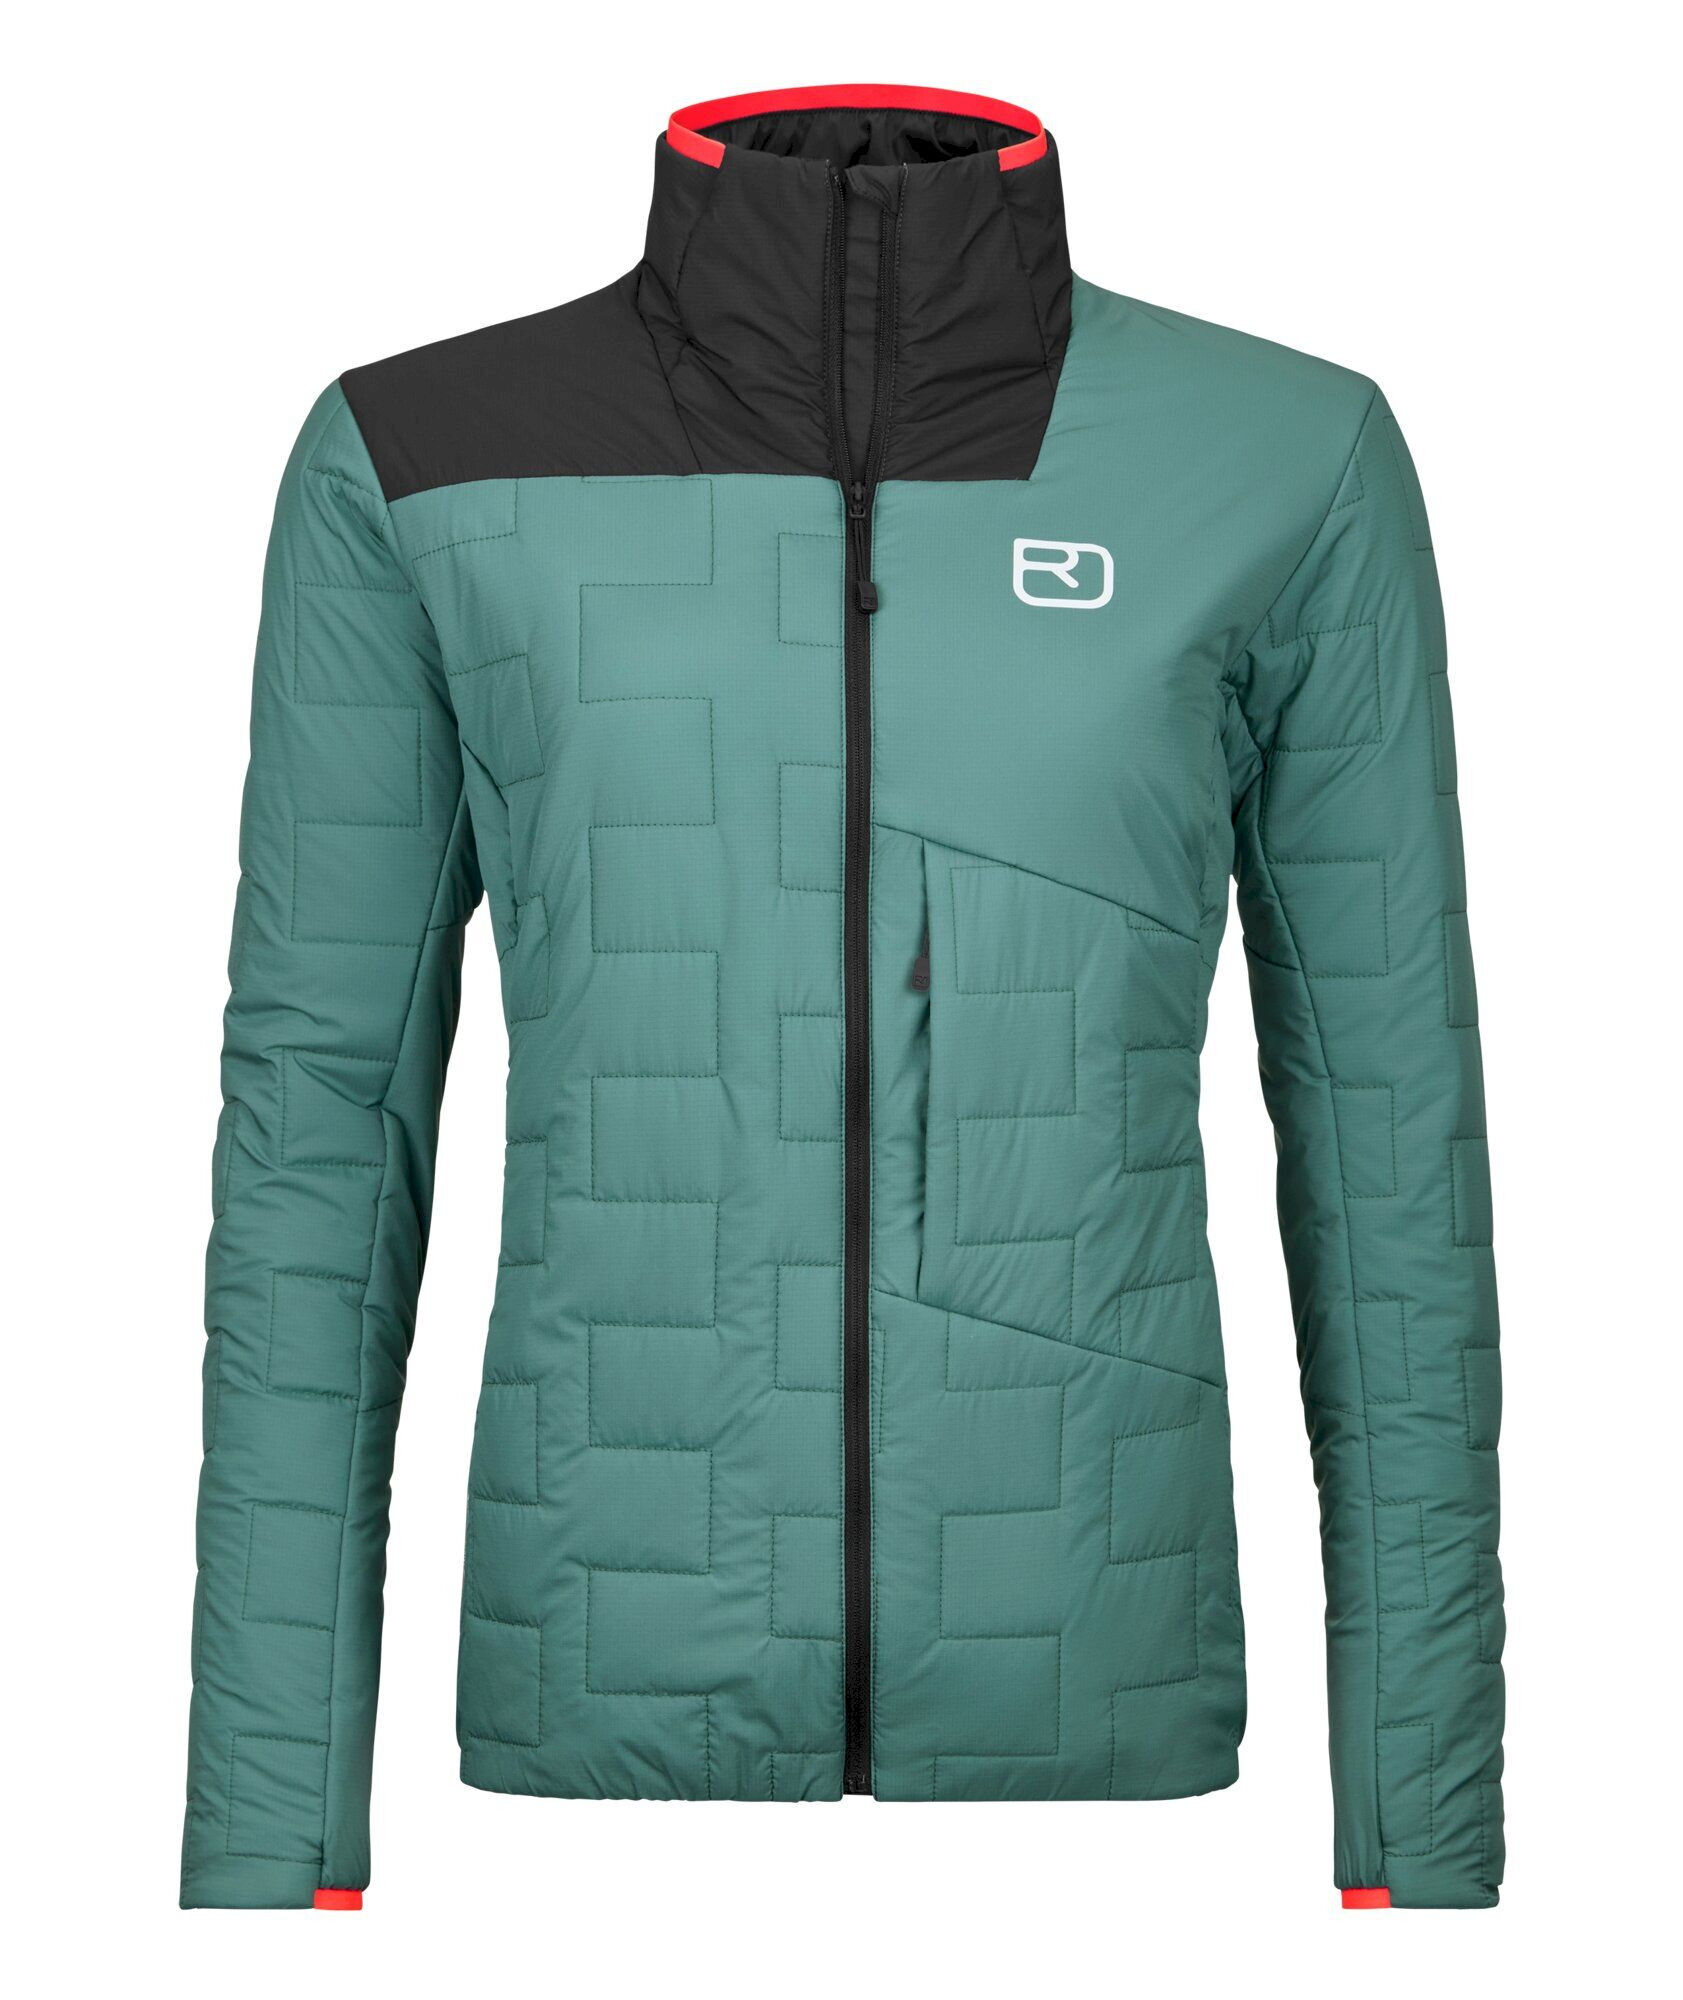 Ortovox Swisswool Piz Segnas Jacket - Merino jacket - Women's | Hardloop